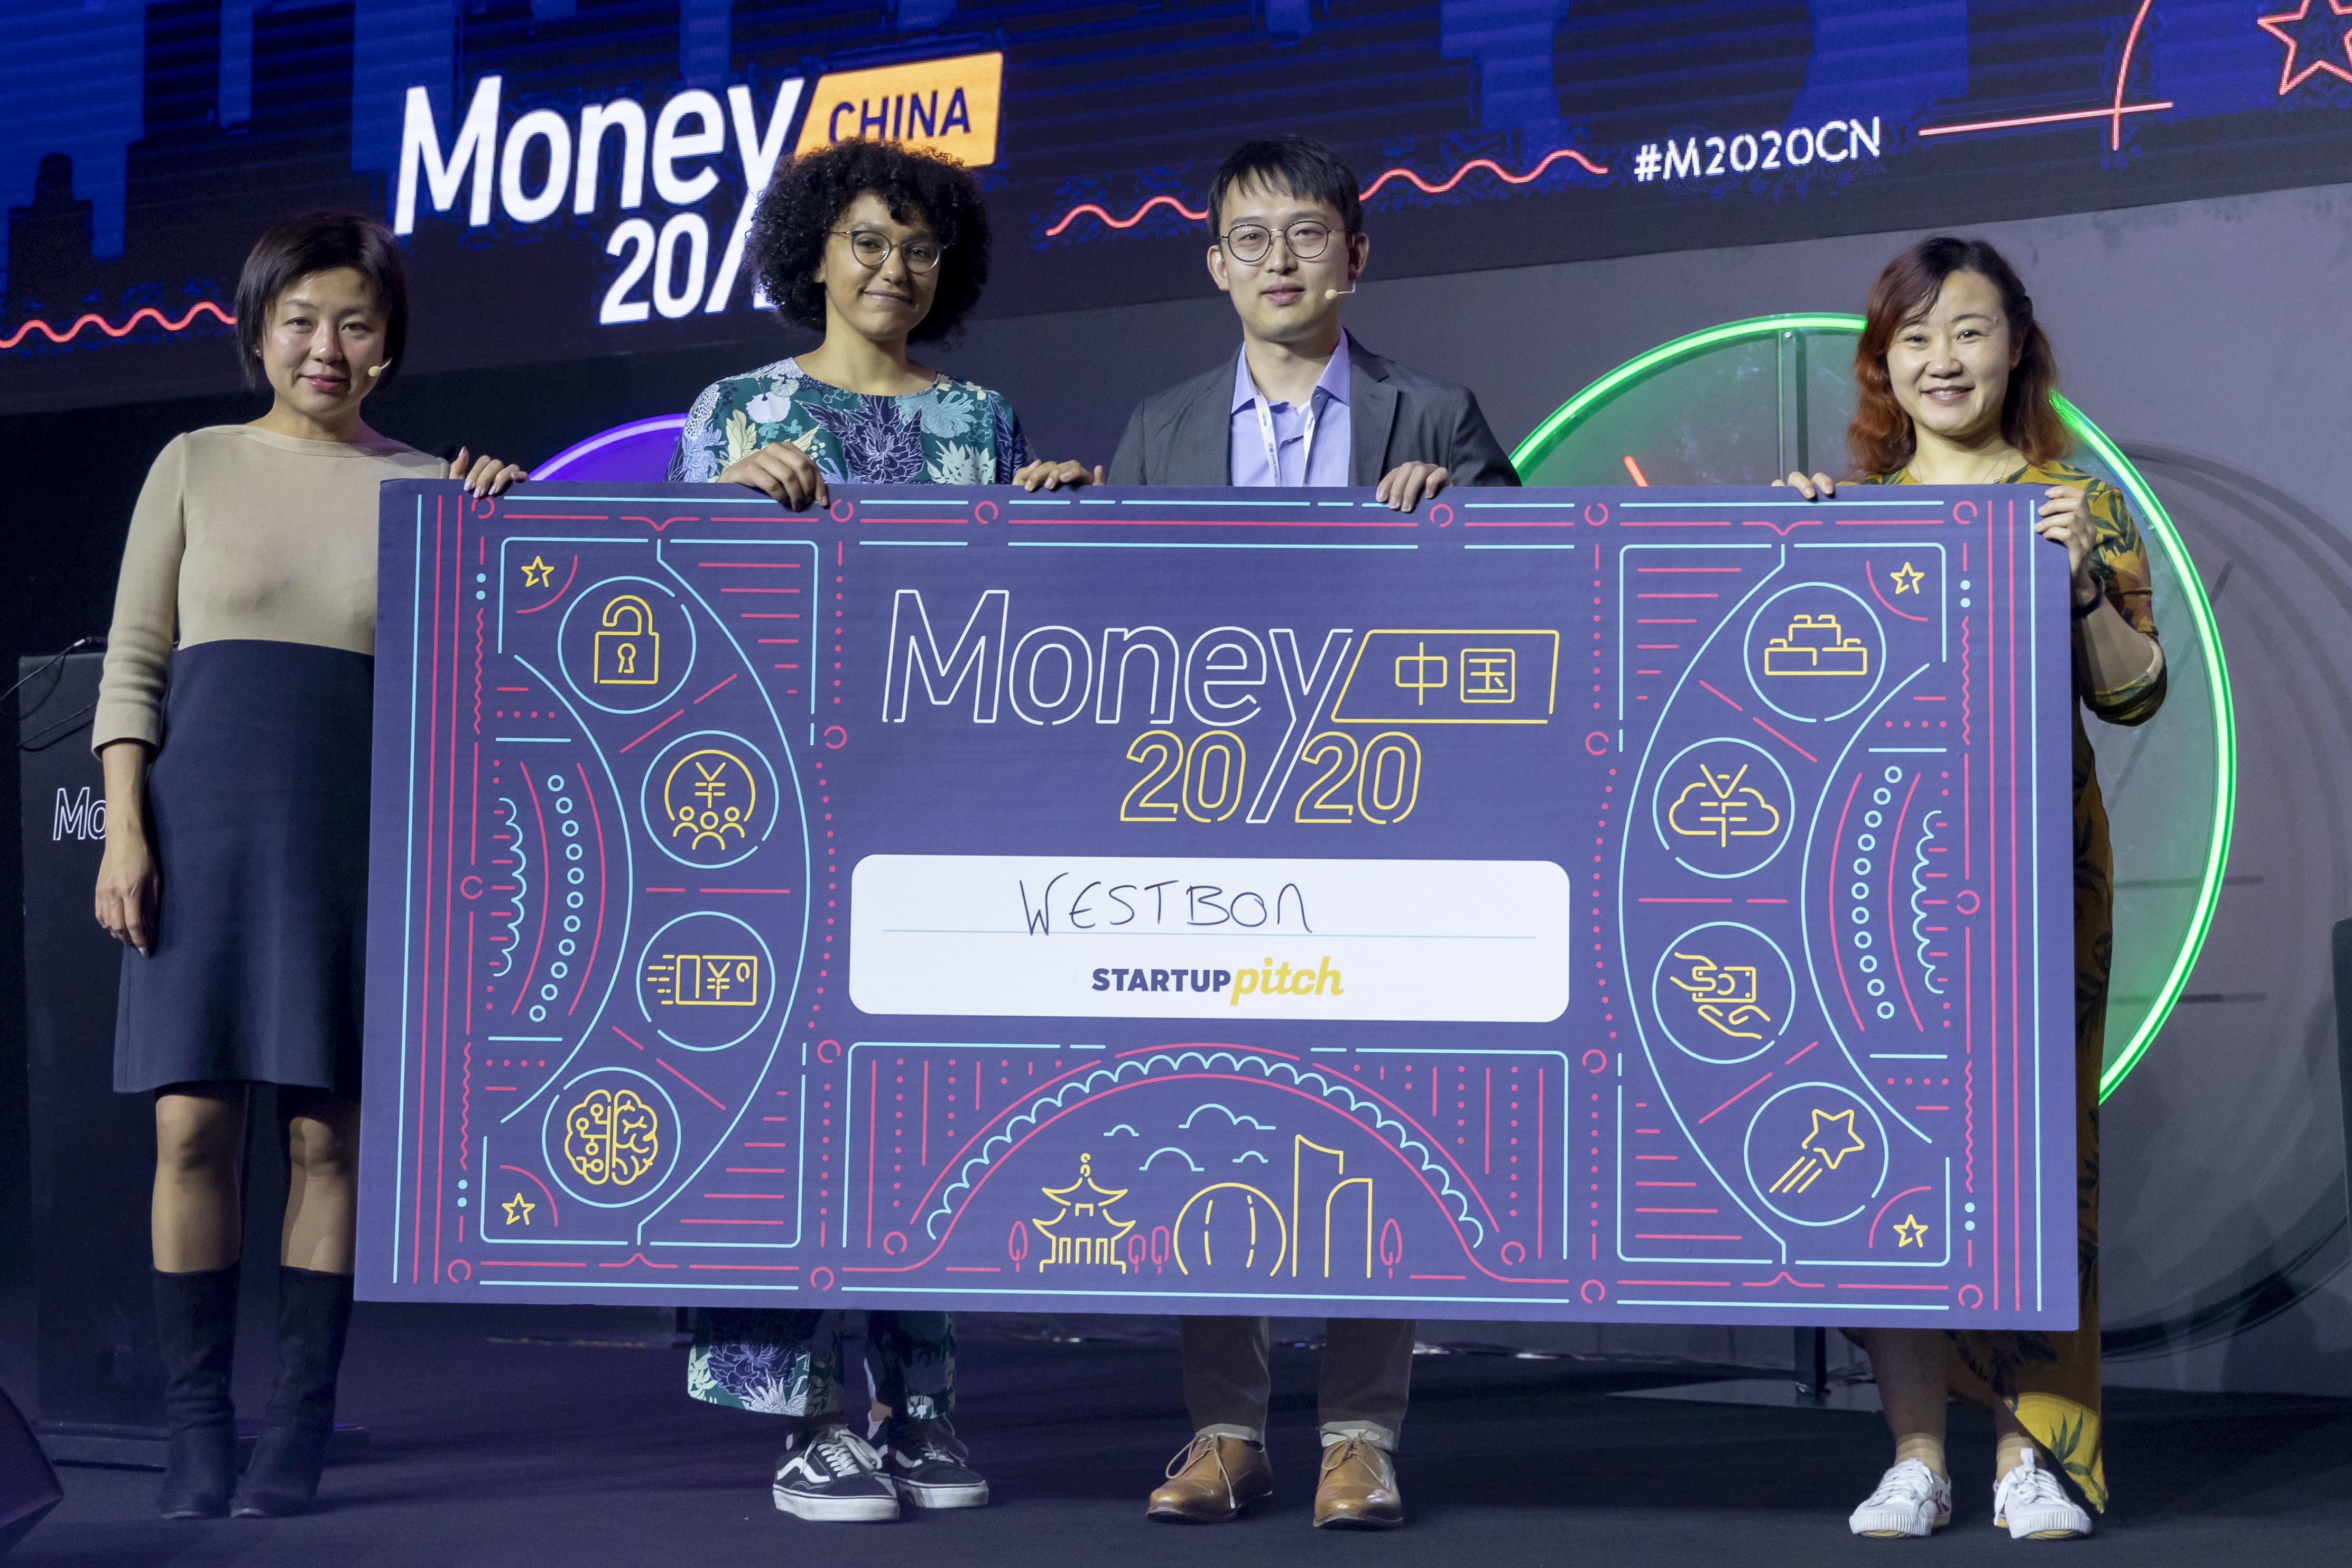 boro (Boro) Wins the Startup Pitch at Money 20/20 CN